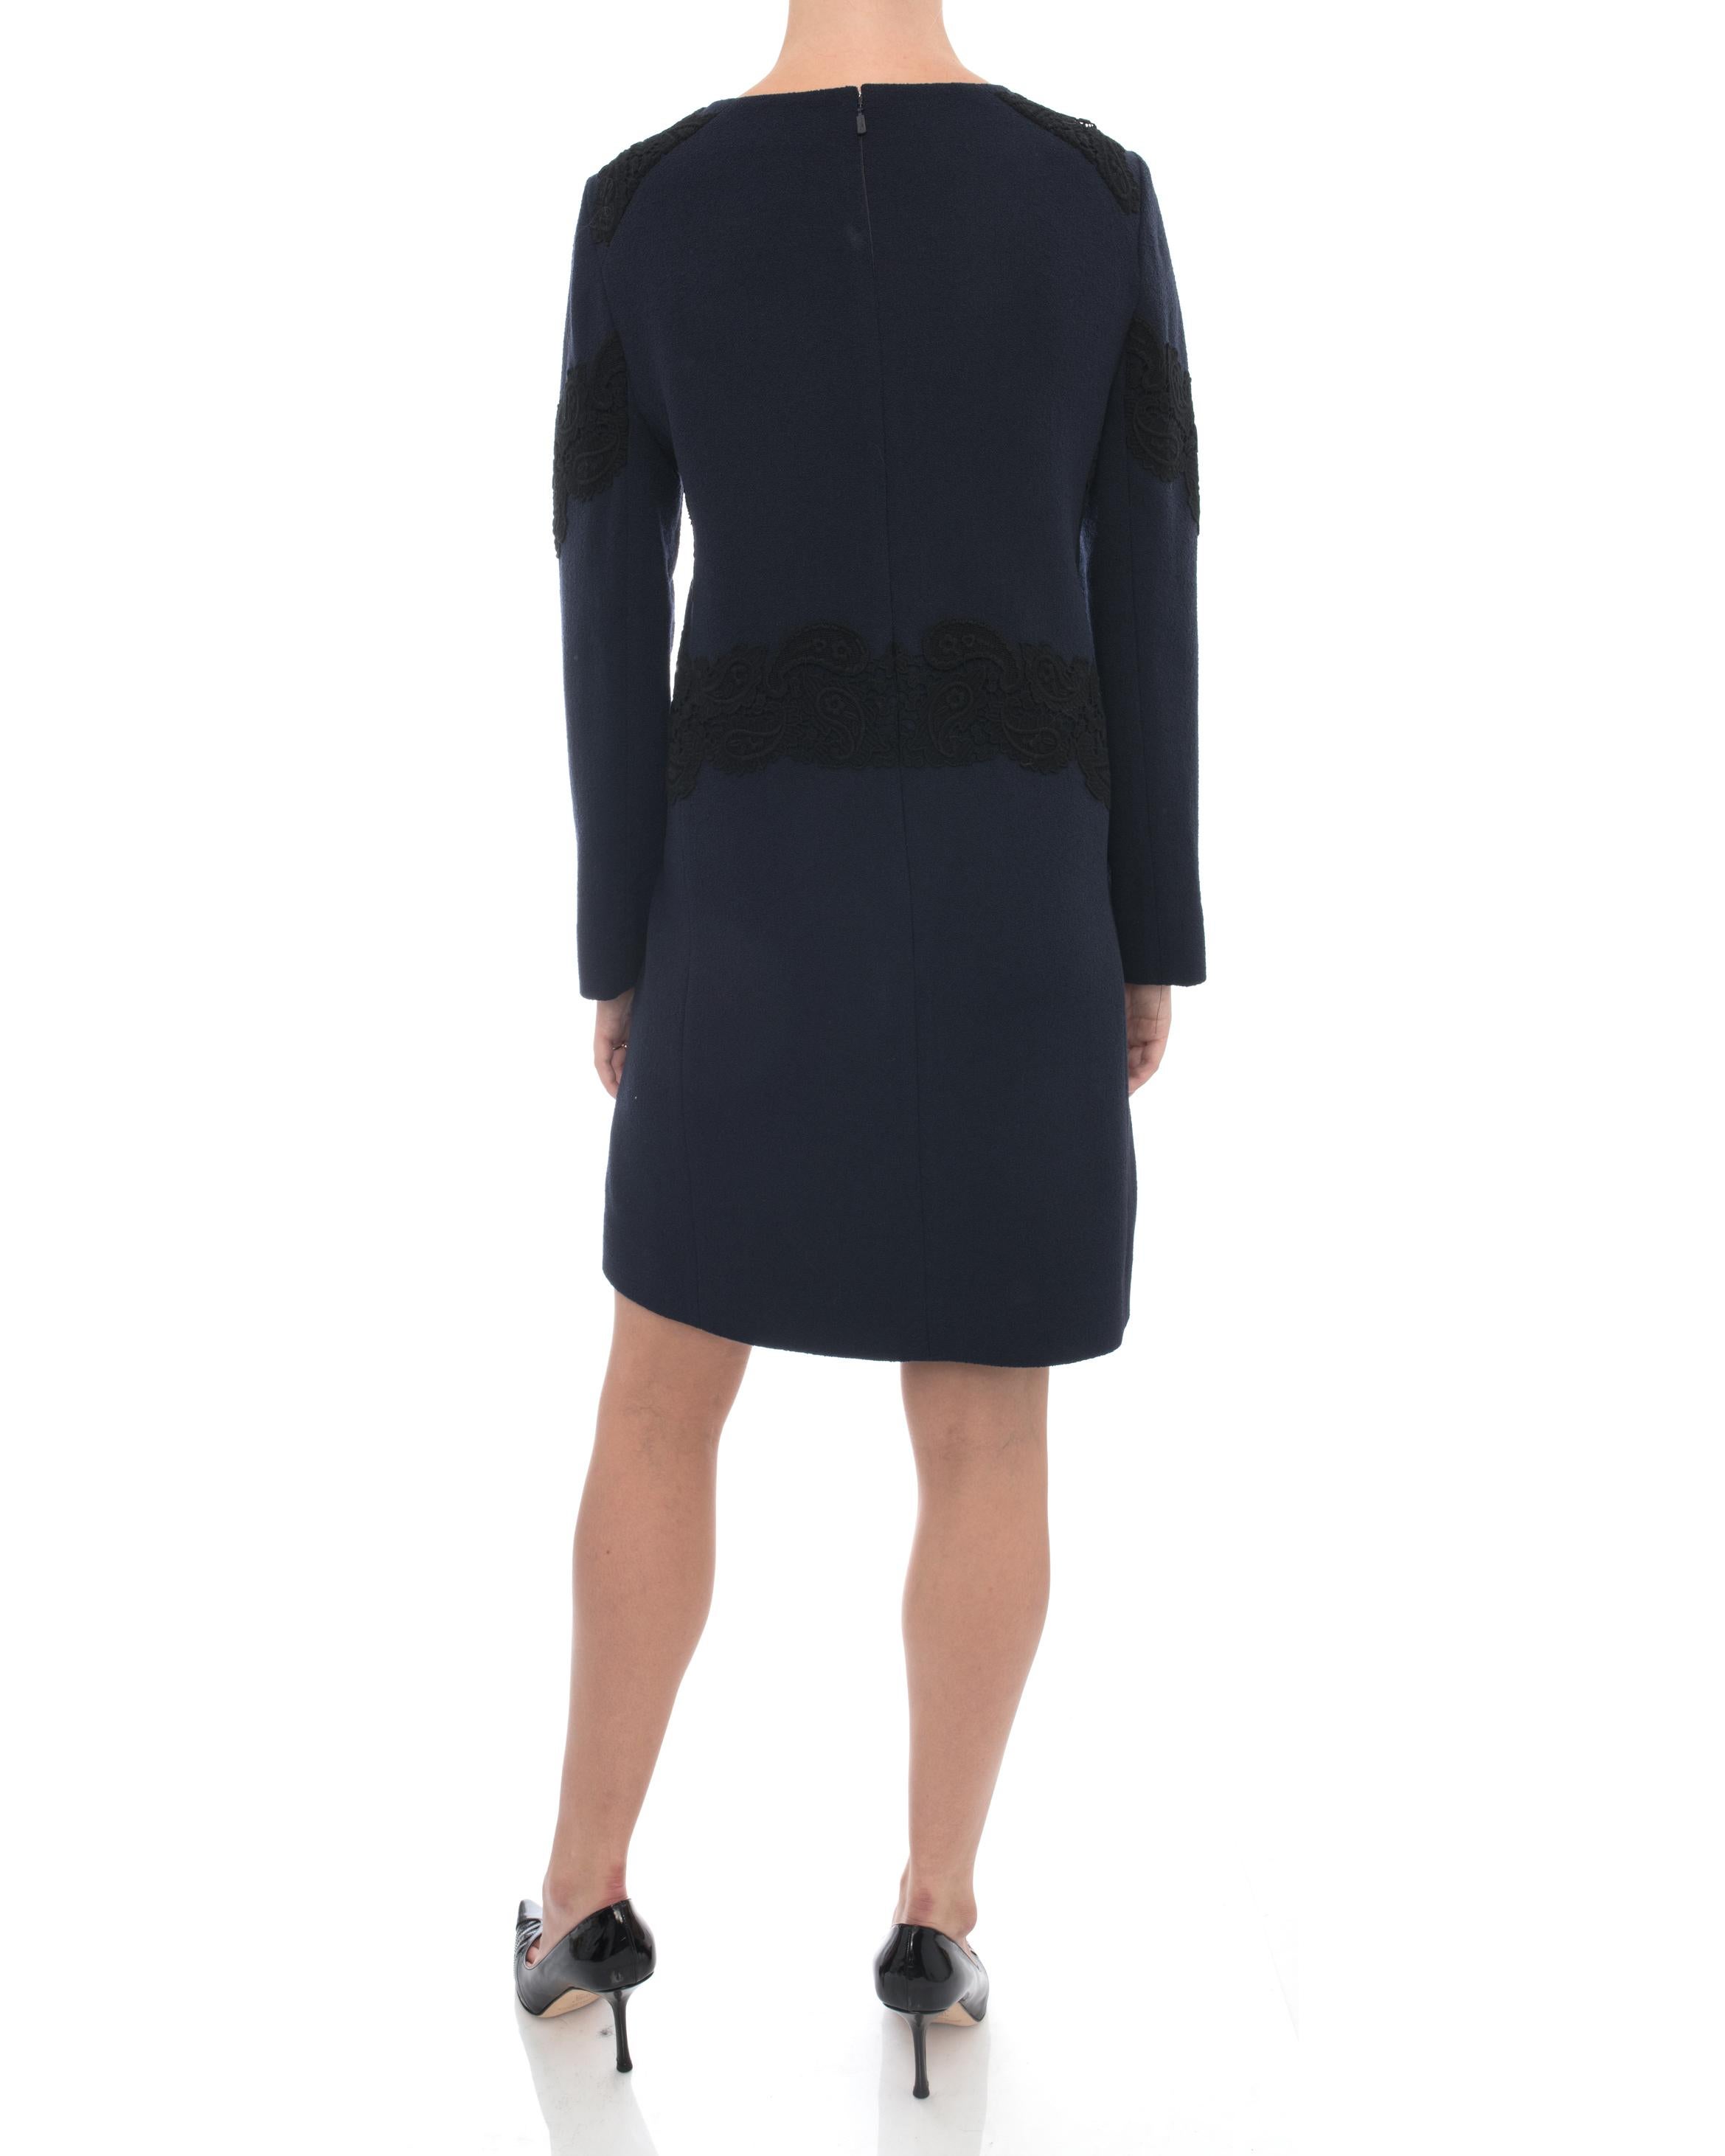 Women's Chloe Navy Wool Long Sleeve Dress with Black Lace - 6